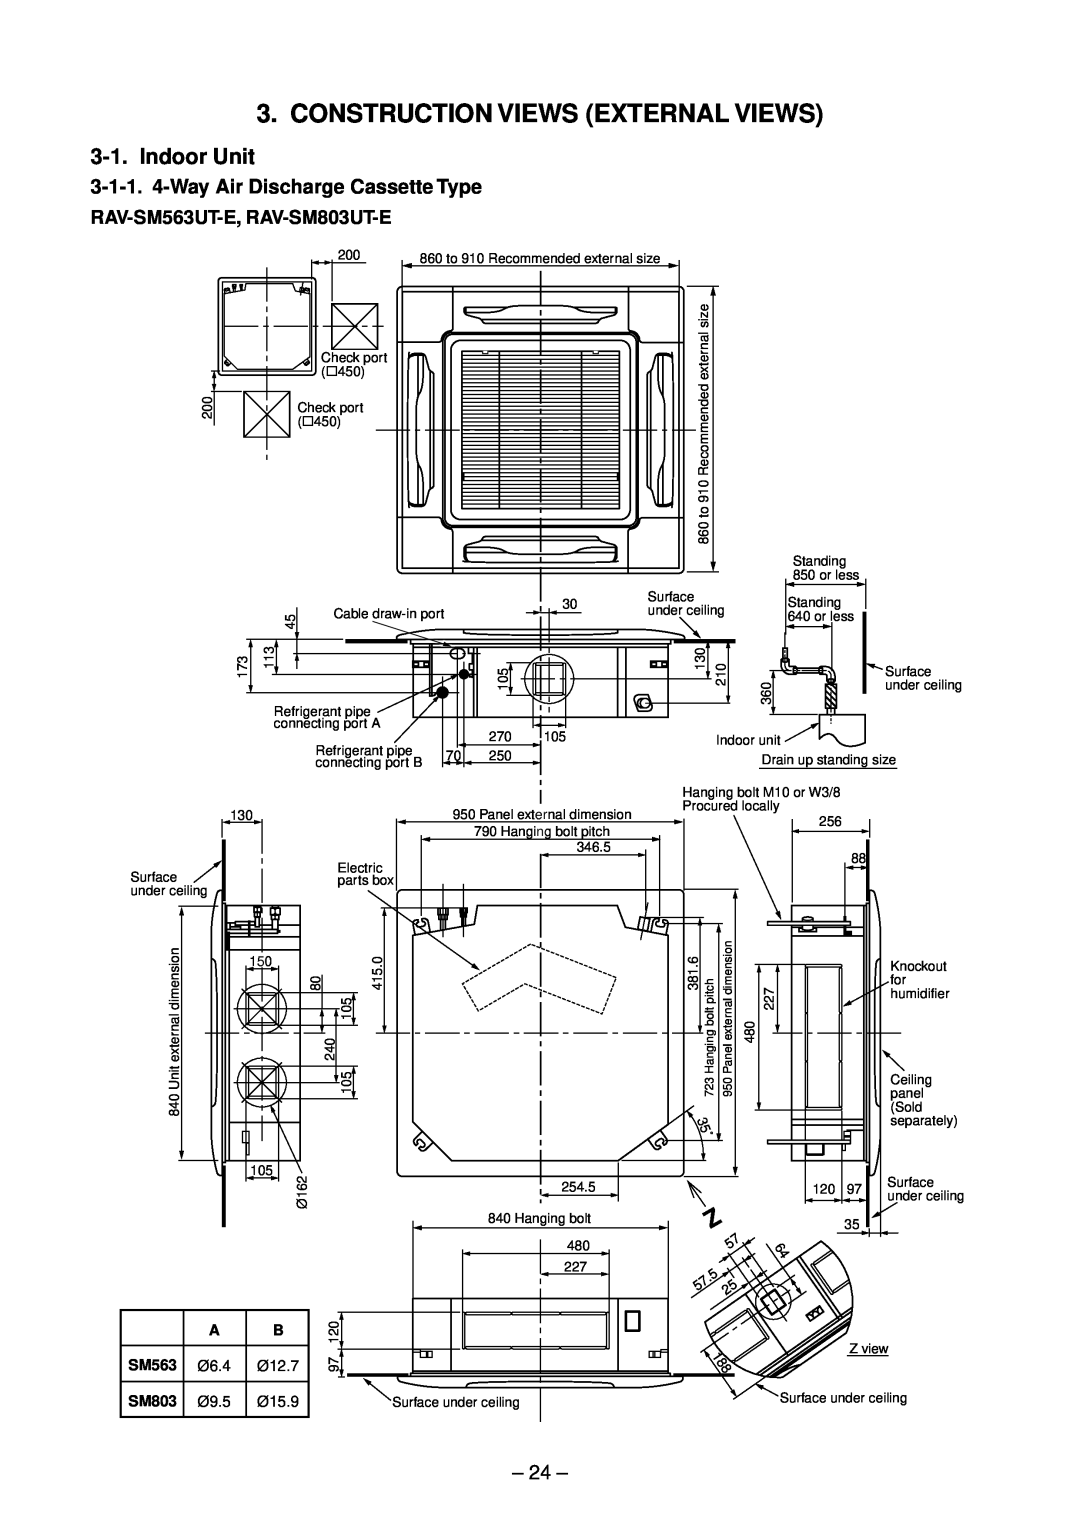 Toshiba RAV-SM563AT-E Construction Views External Views, 3-1-1. 4-Way Air Discharge Cassette Type, Ø6.4, Ø12.7, SM803 